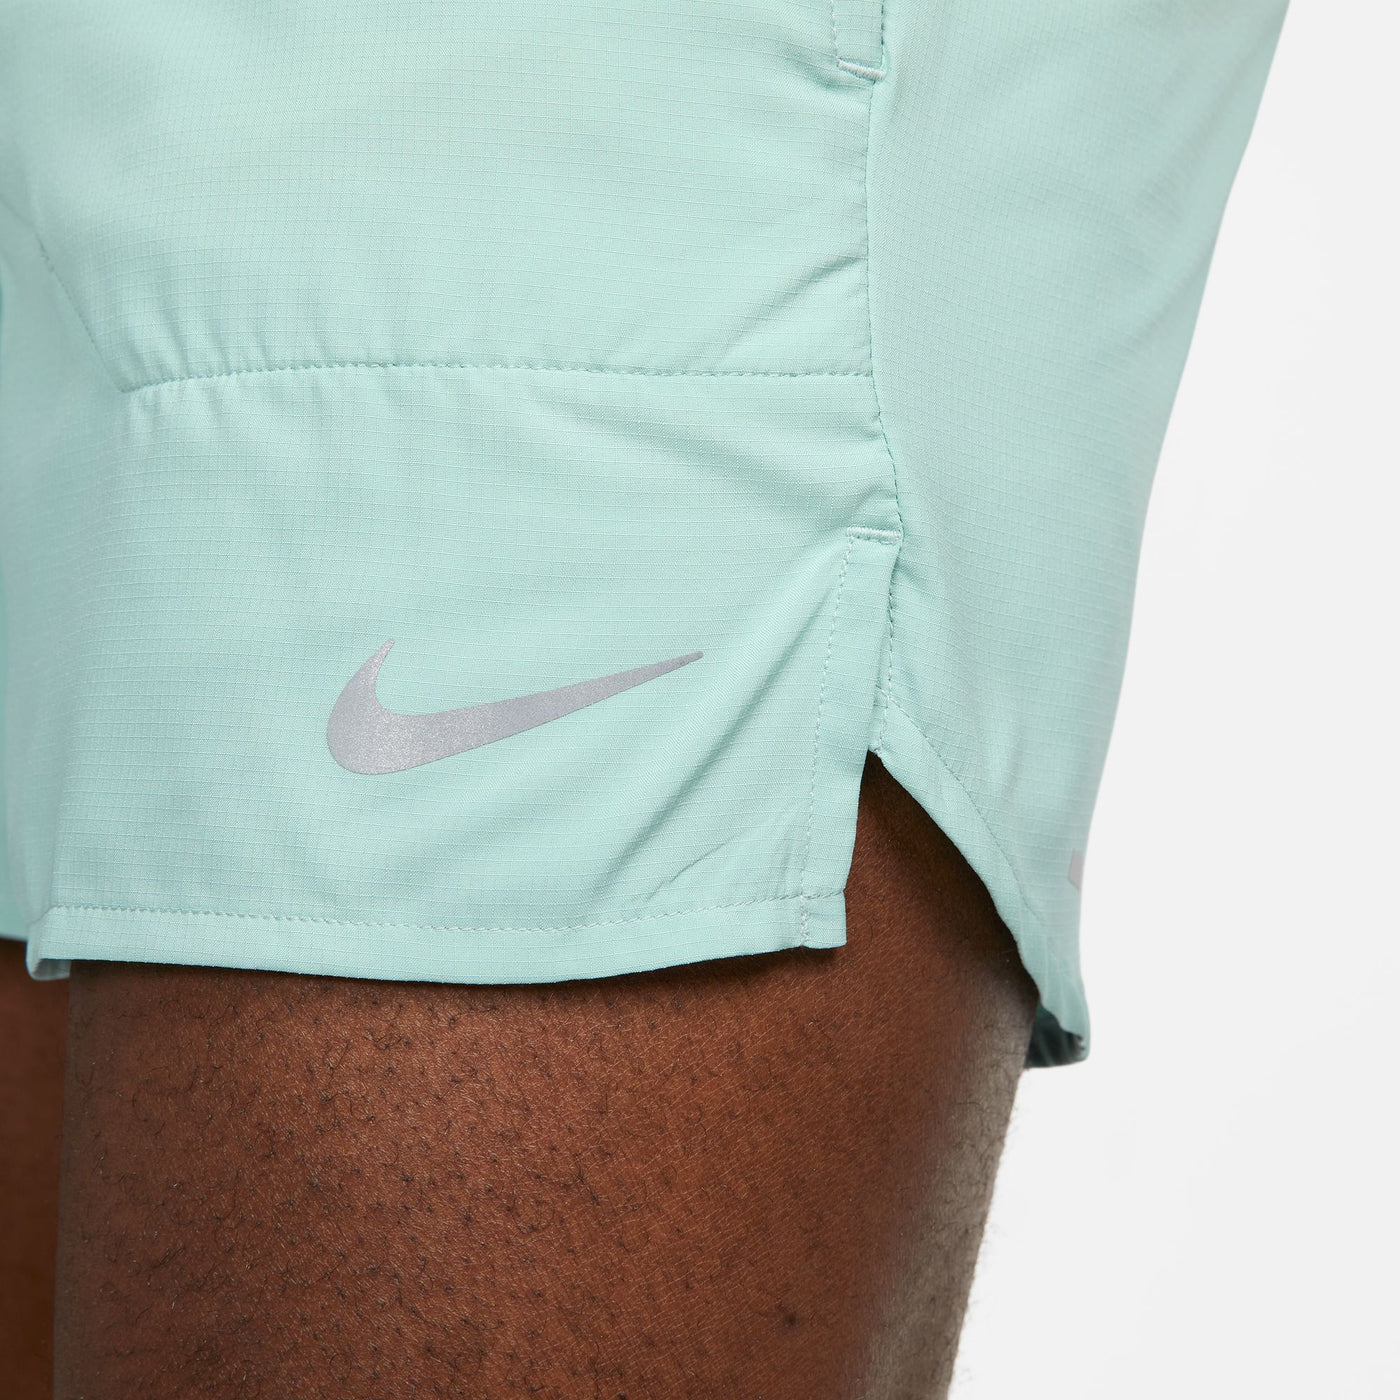 Men's Nike 5" Stride Shorts - DM4755-309